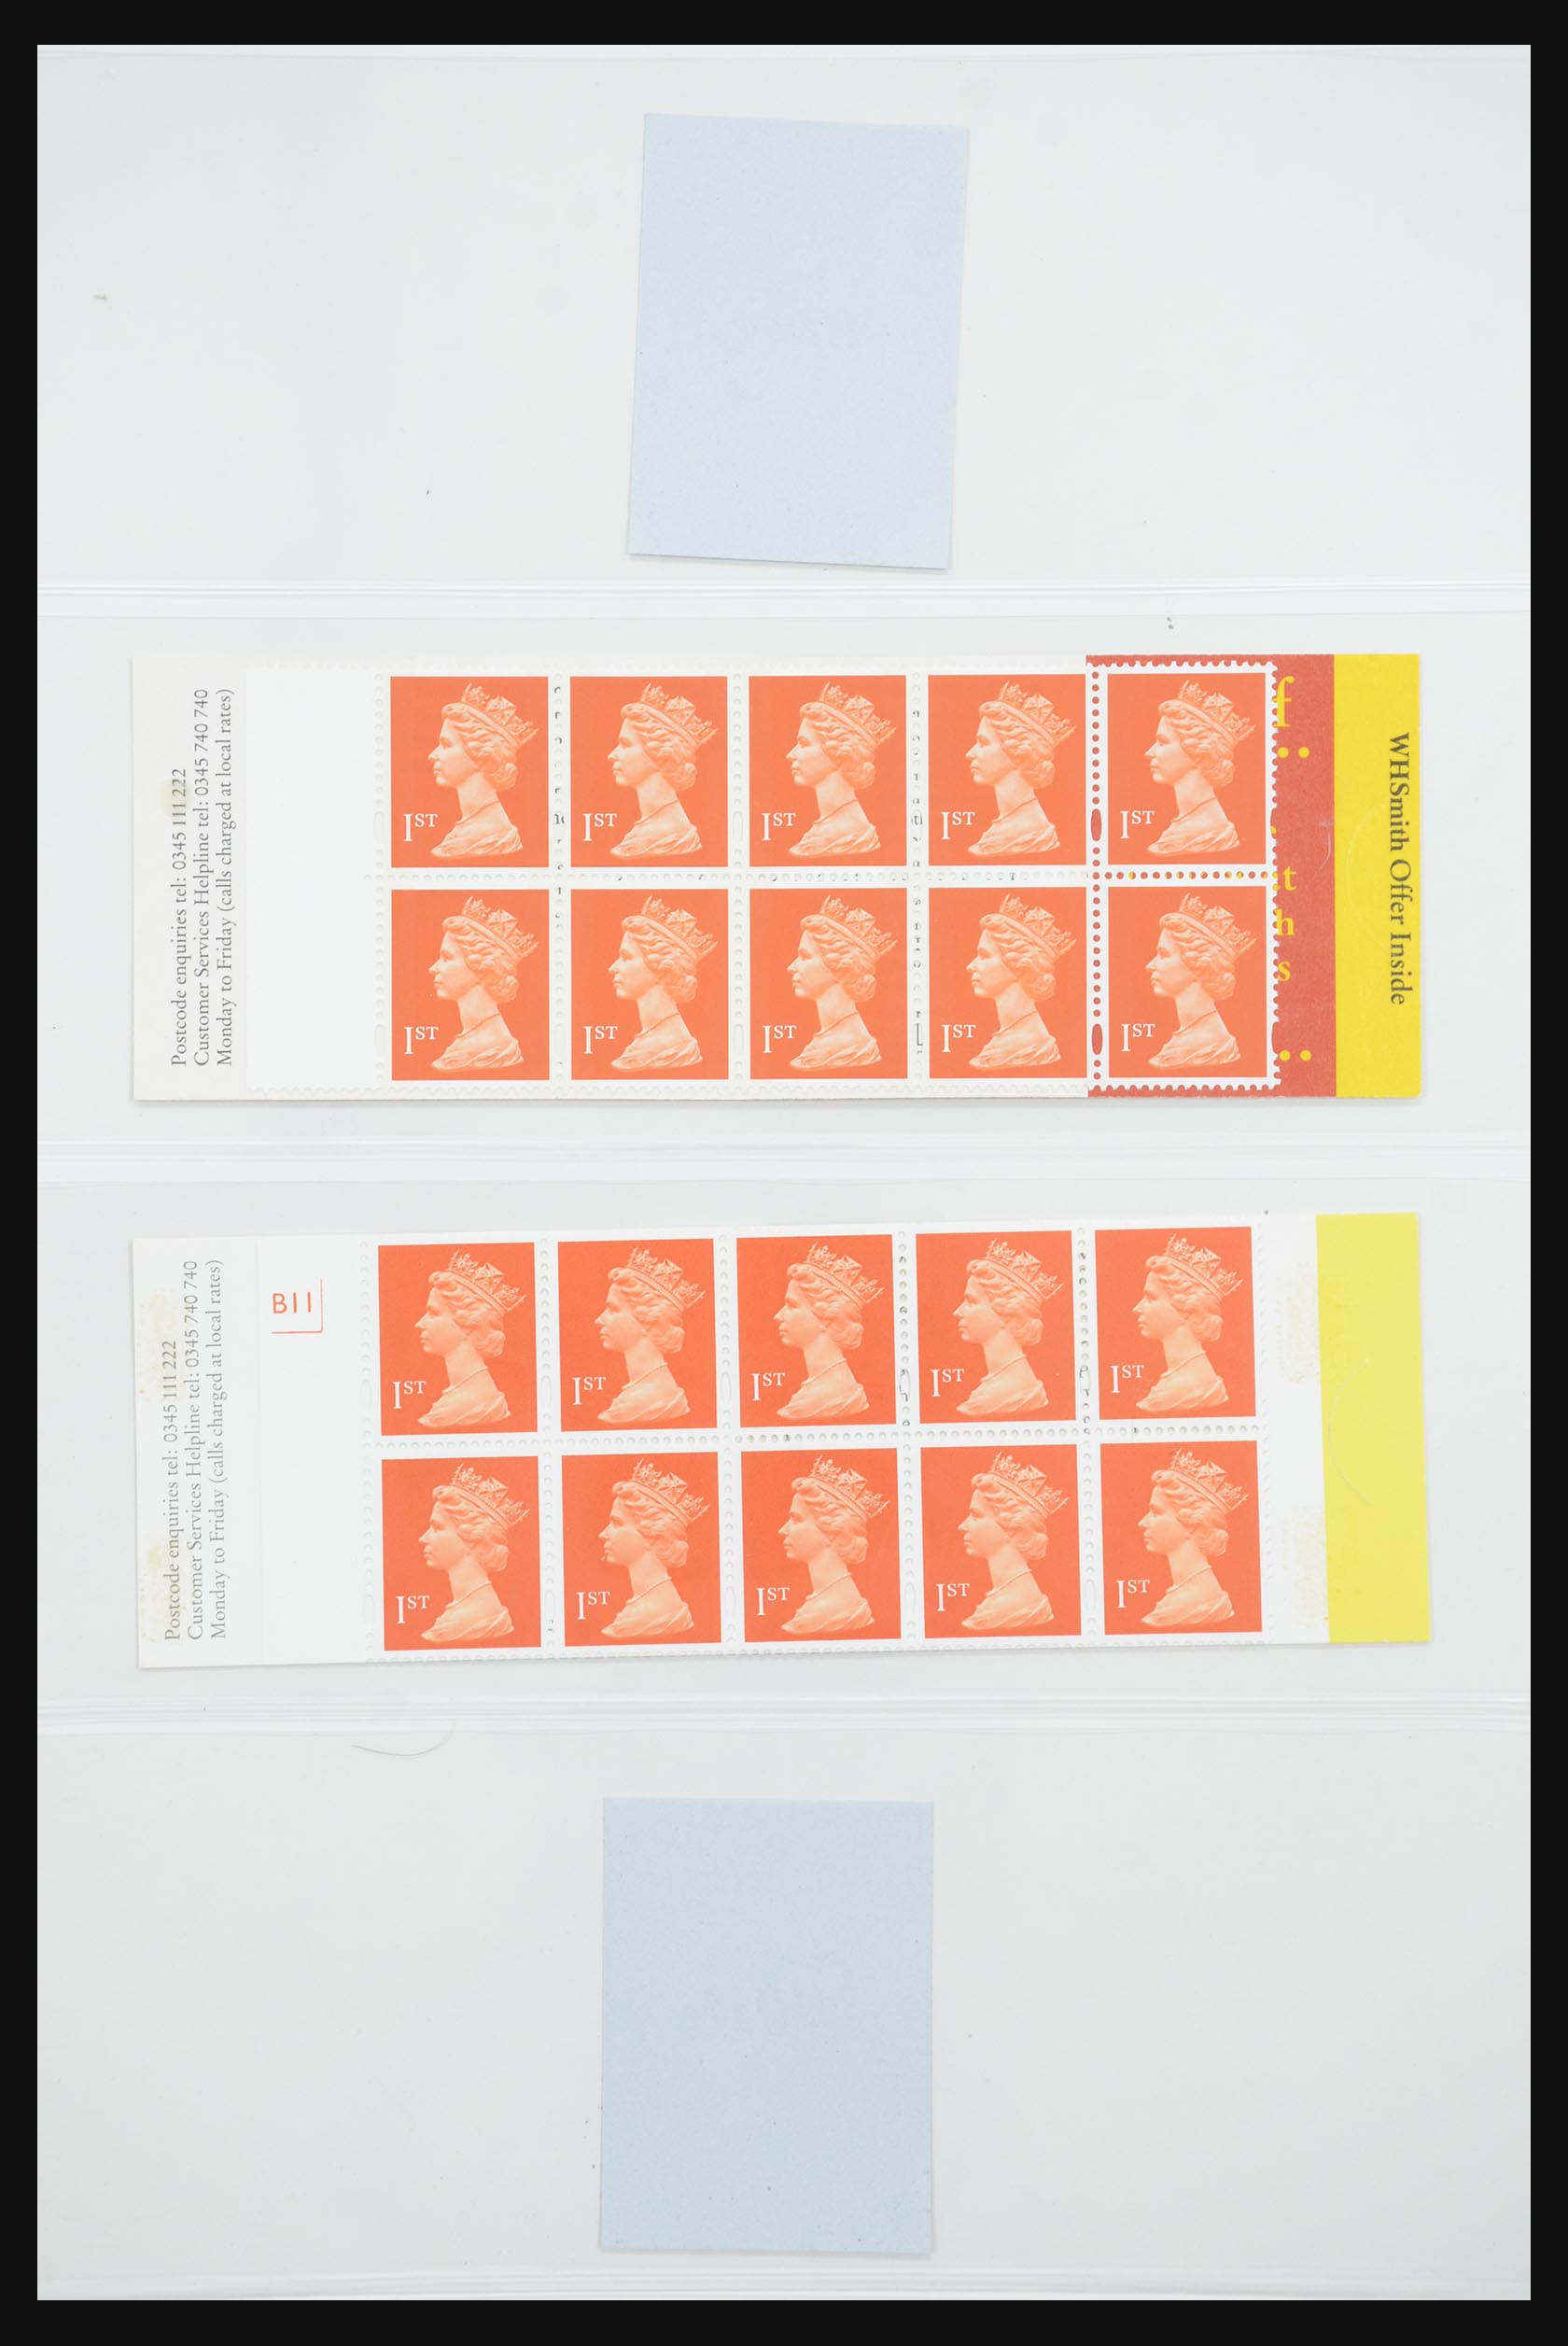 31960 150 - 31960 Great Britain stampbooklets 1989-2000.